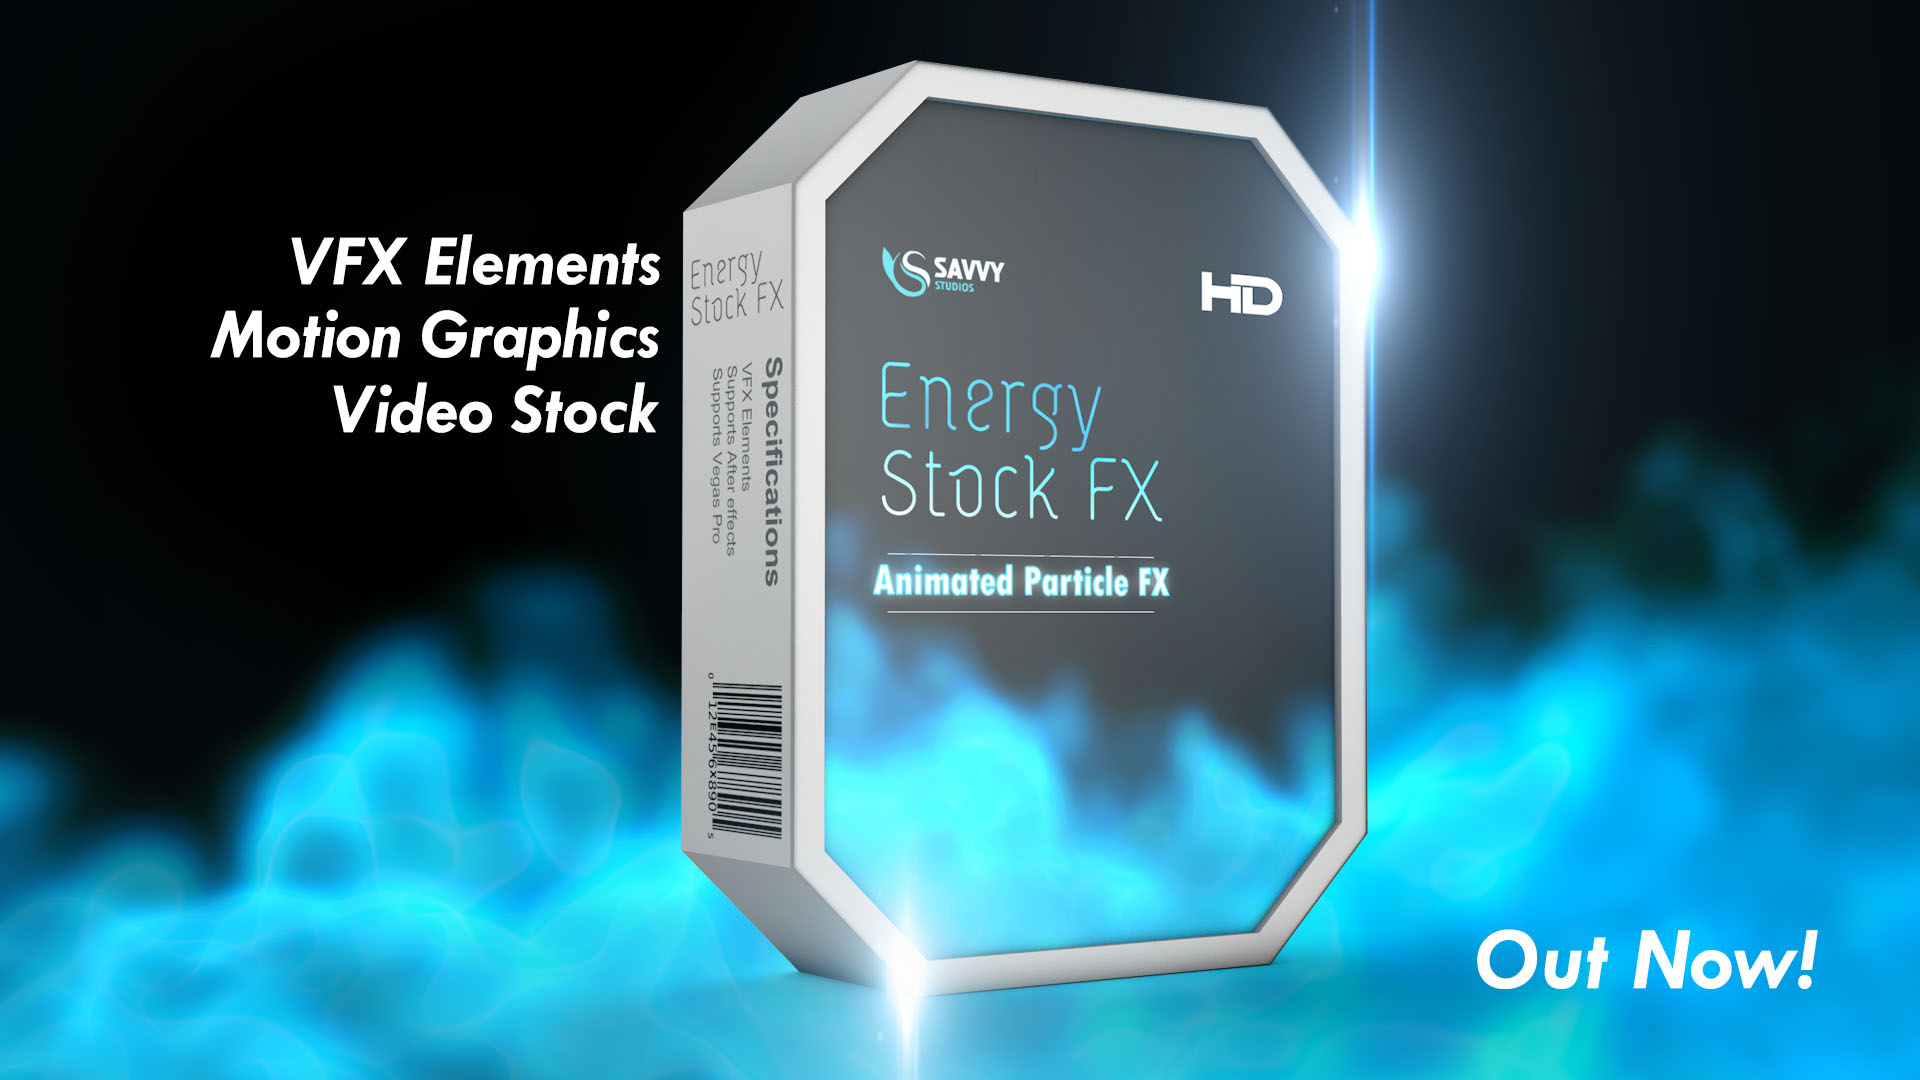 Energy Stock-FX HD